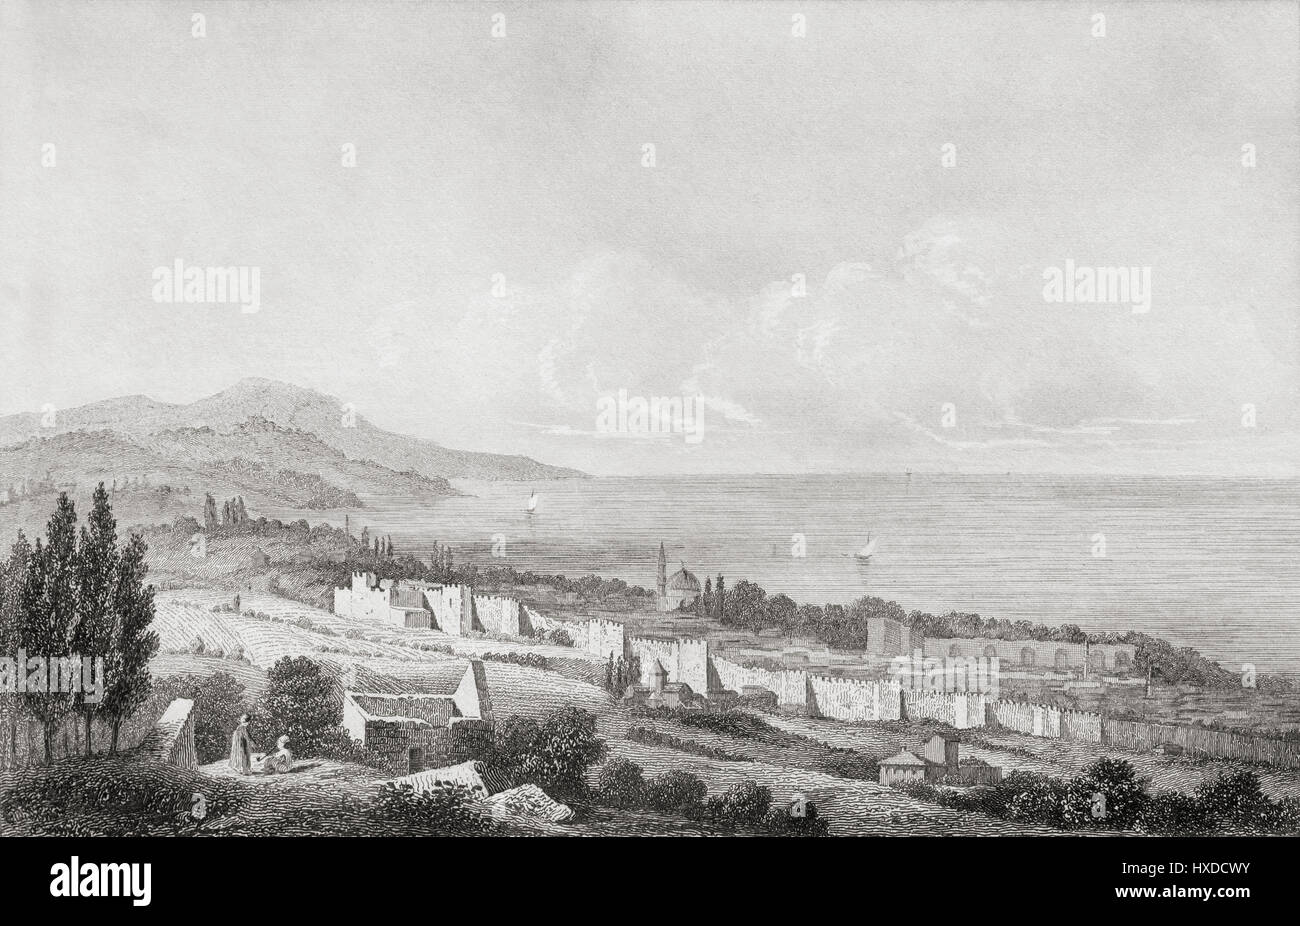 Trabzon, Trebizond, Trevisonda, Turquía. Siglo xix acero grabado por Preaux, Lemaitre y Lalaisse direxit. Foto de stock